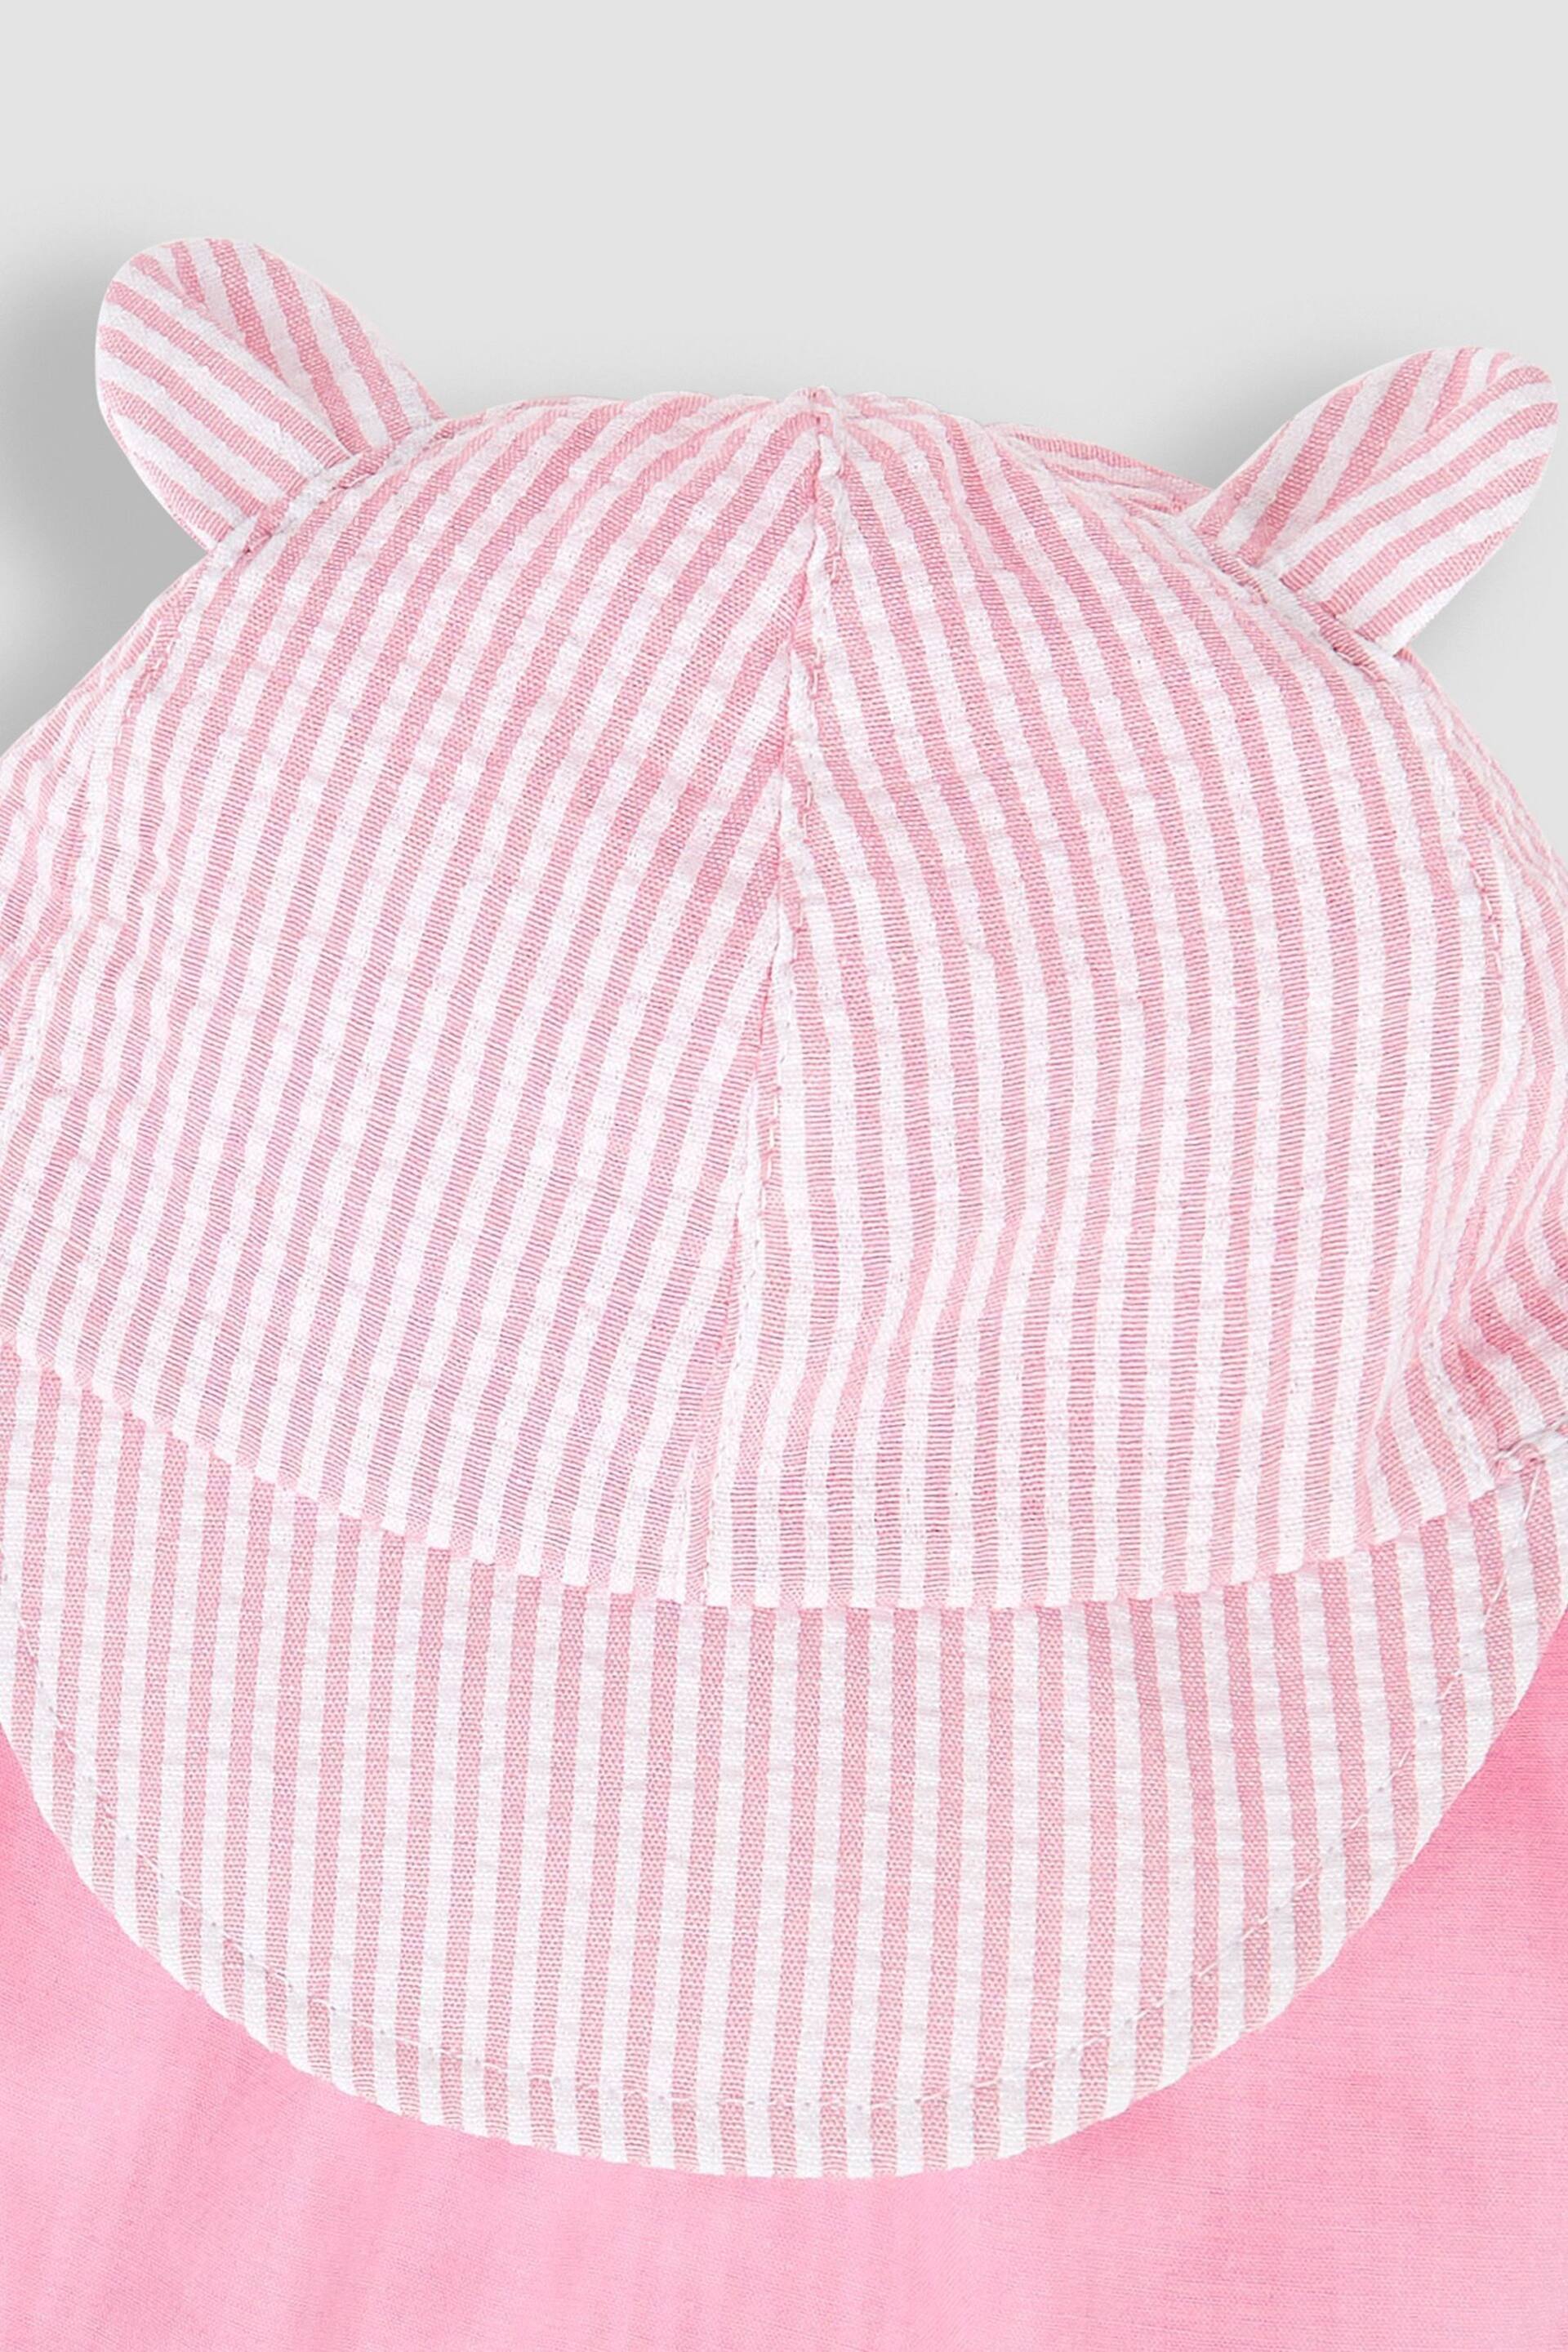 JoJo Maman Bébé Pink Stripe Legionnaire Cap - Image 3 of 3